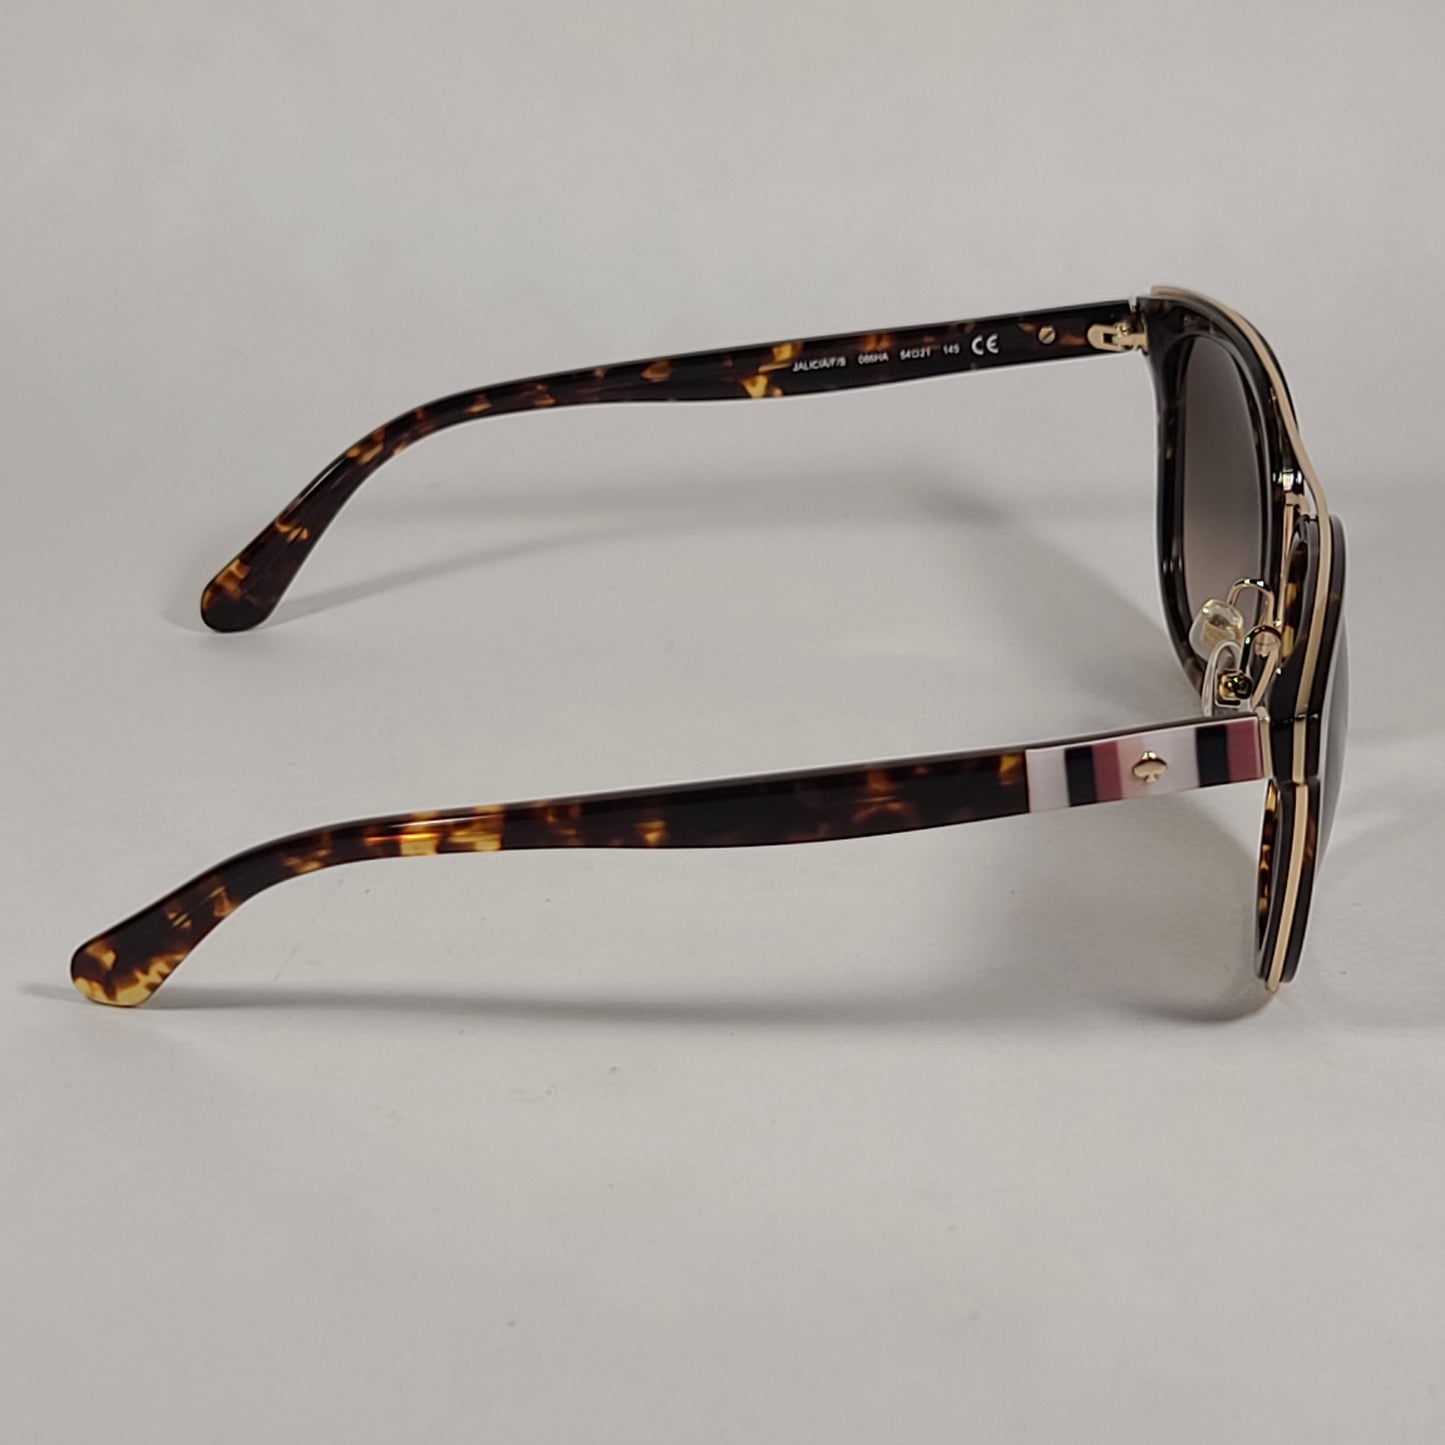 Kate Spade JALICIA/F/S 086HAFull Rim Sunglasses Dark Havana Brown And Gold Frame Brown Gradient Lenses - Sunglasses